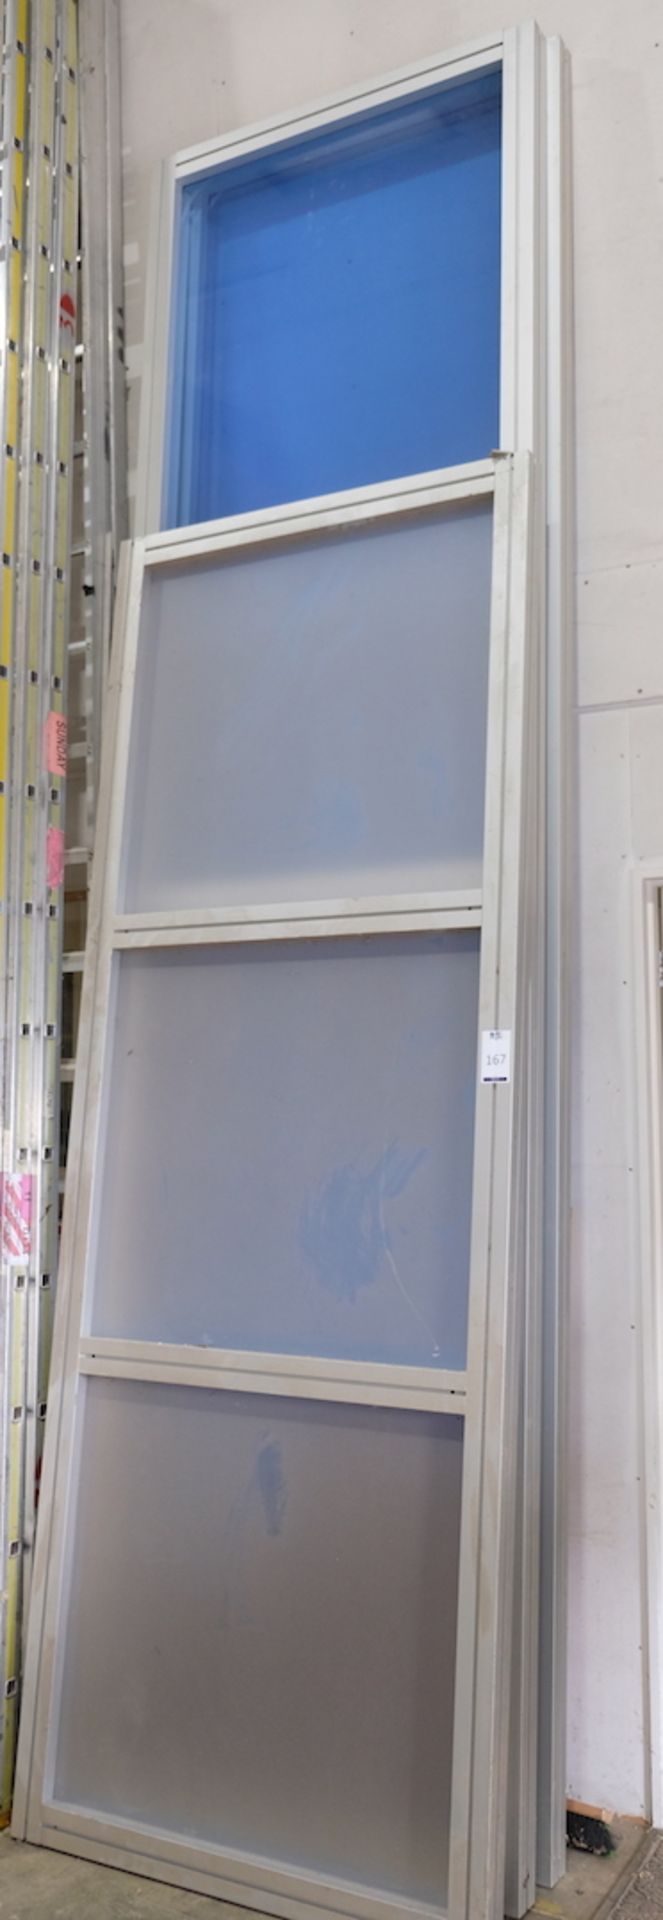 Two Aluminium Framed Perspex Glazed Panels, Approximately 370cm x 105cm & Similar 300cm x 105cm